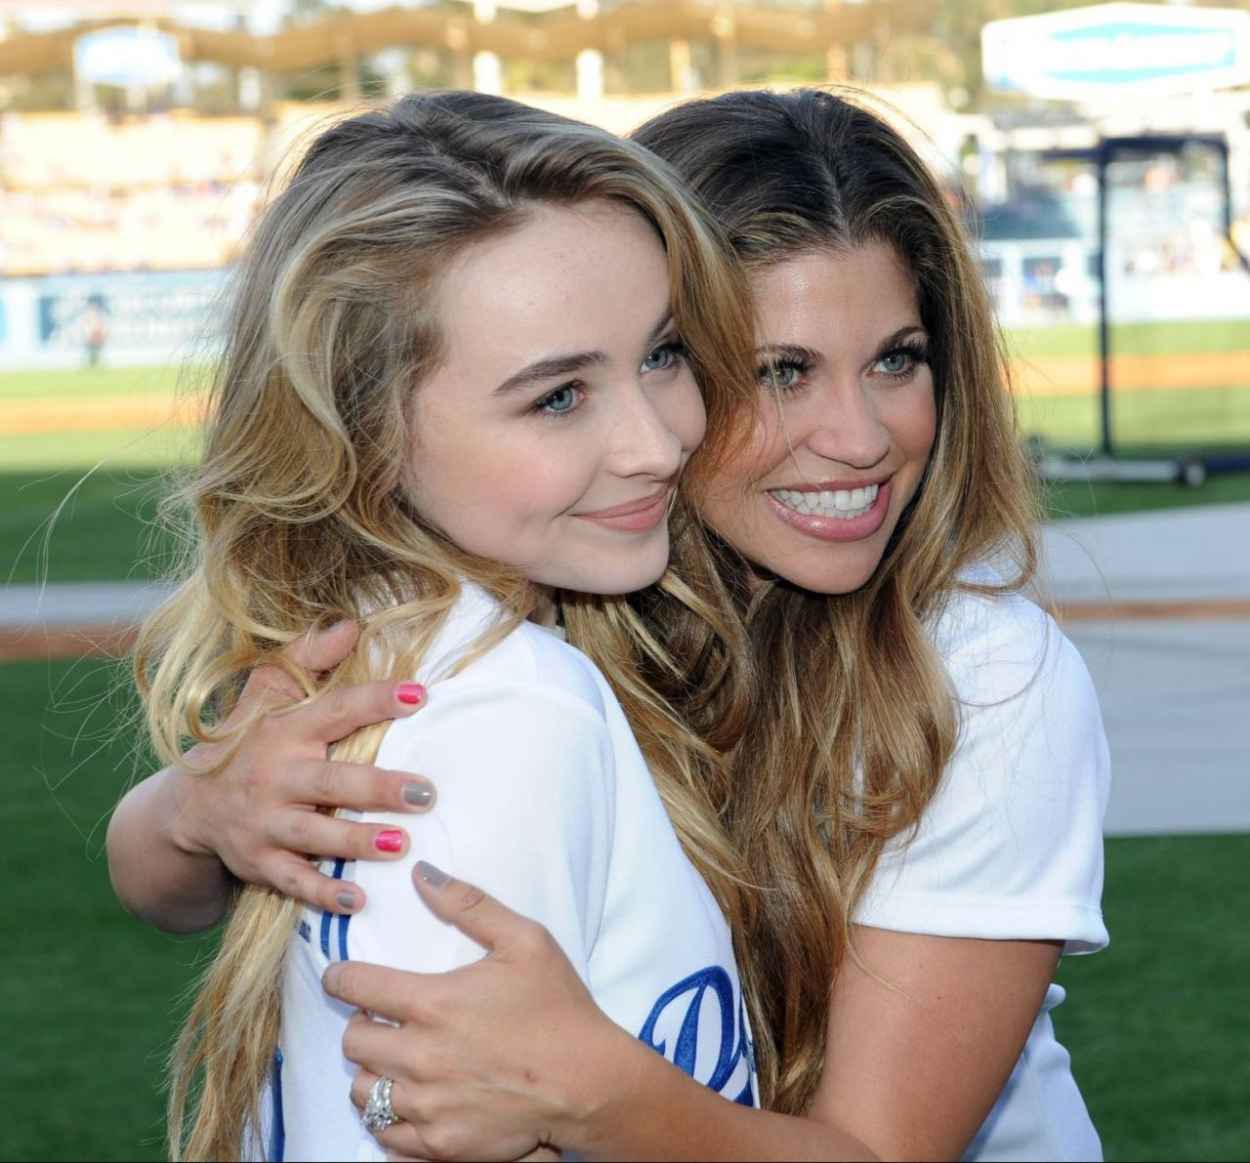 Danielle Fishel, Sabrina Carpenter and Rowan Blanchard - Dodgers Game in Los Angeles - June 2015-2